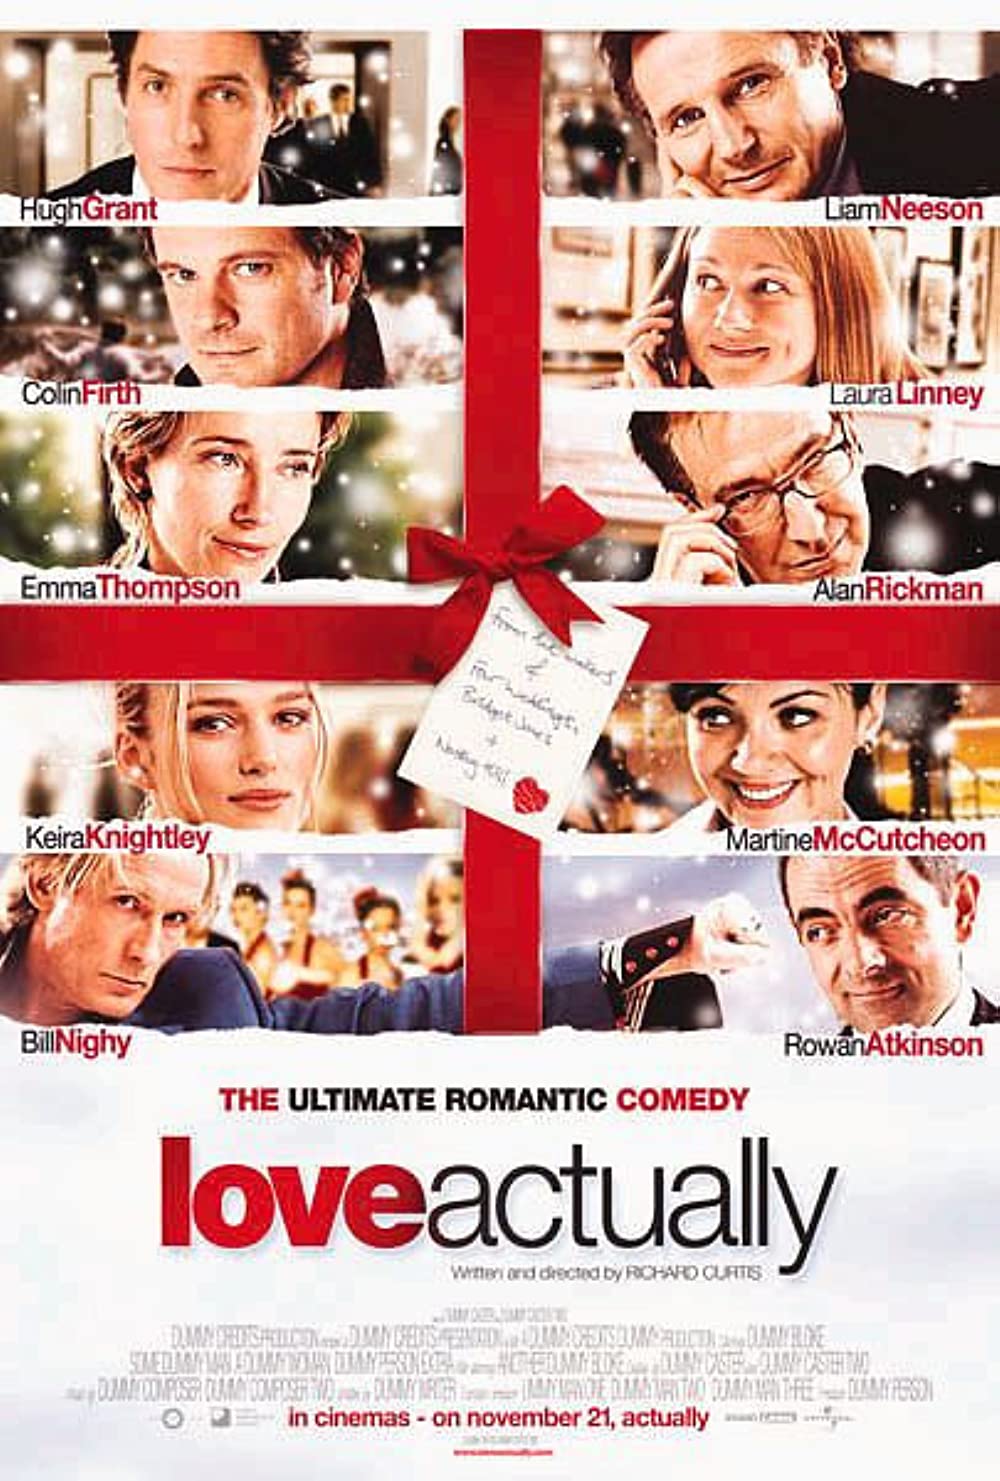 Love Actually (2003) Christmas Movies